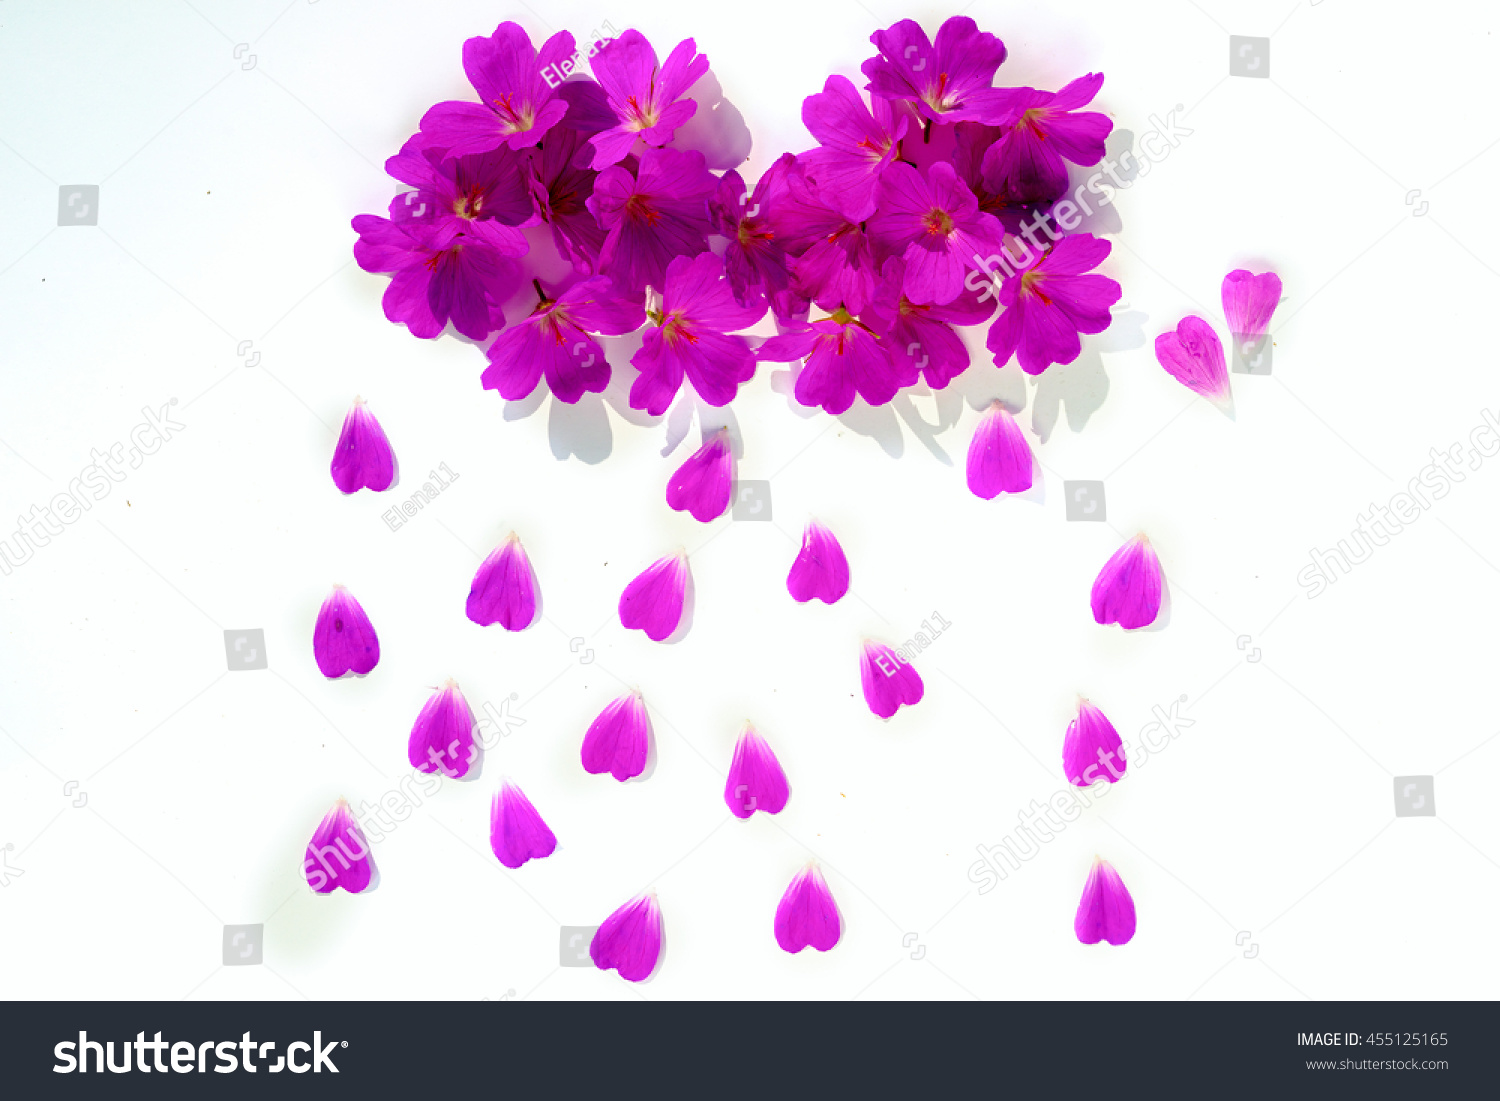 Edit Photos Free Online - a cloud of flowers | Shutterstock Editor